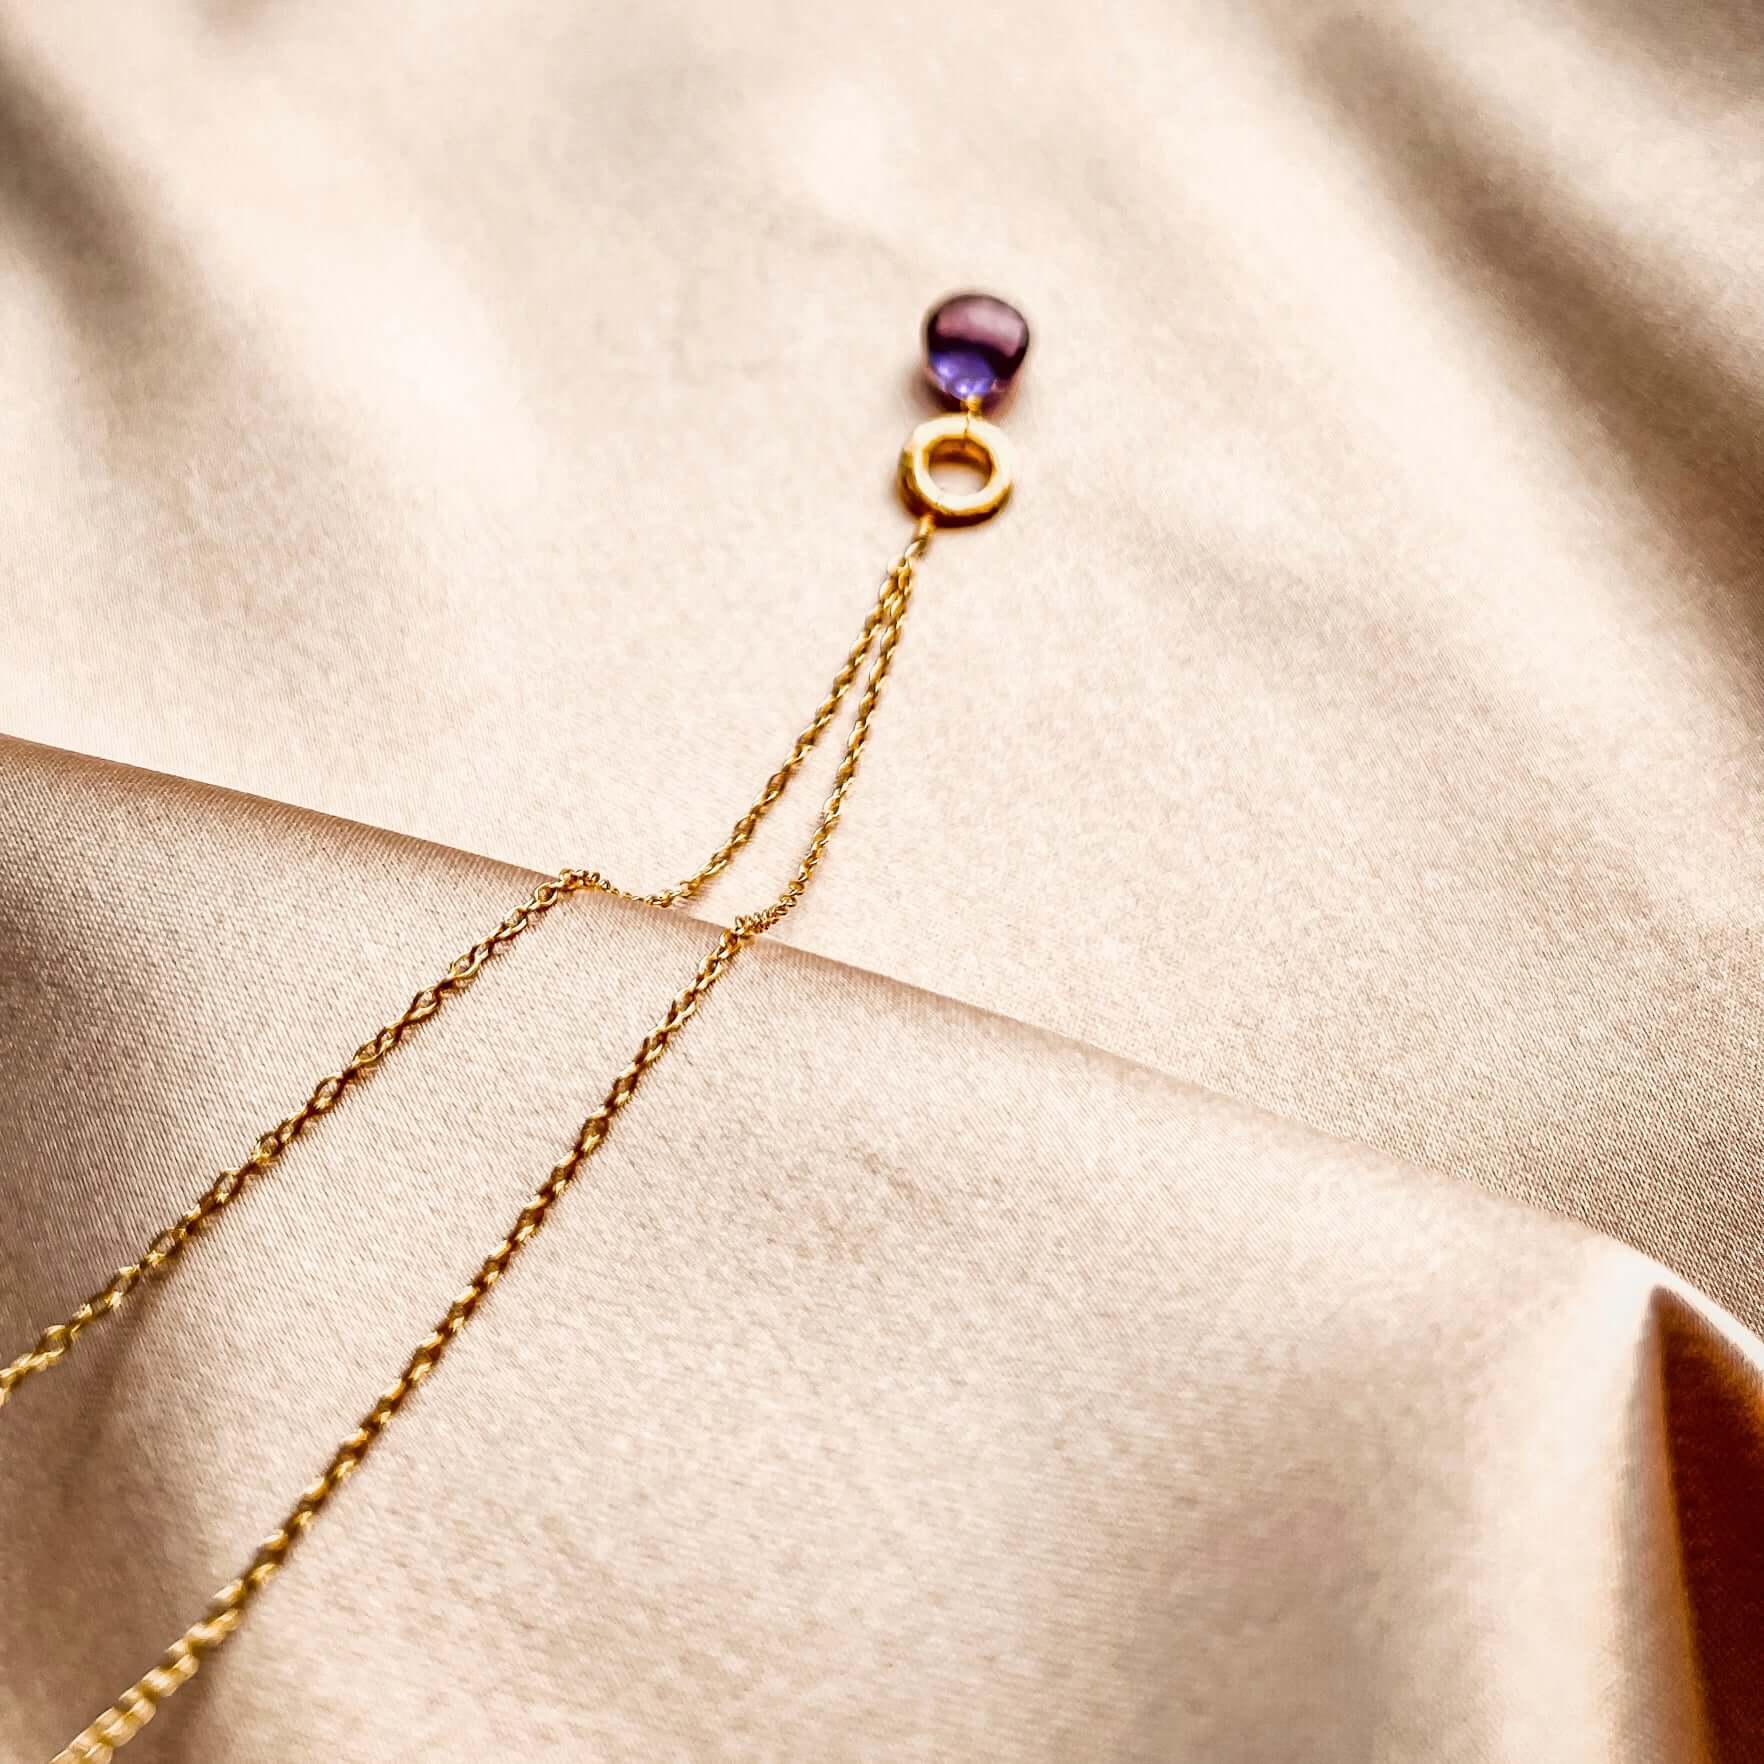 Amethyst Gemstone Pendant Necklace - 14k Gold Plated Elegance